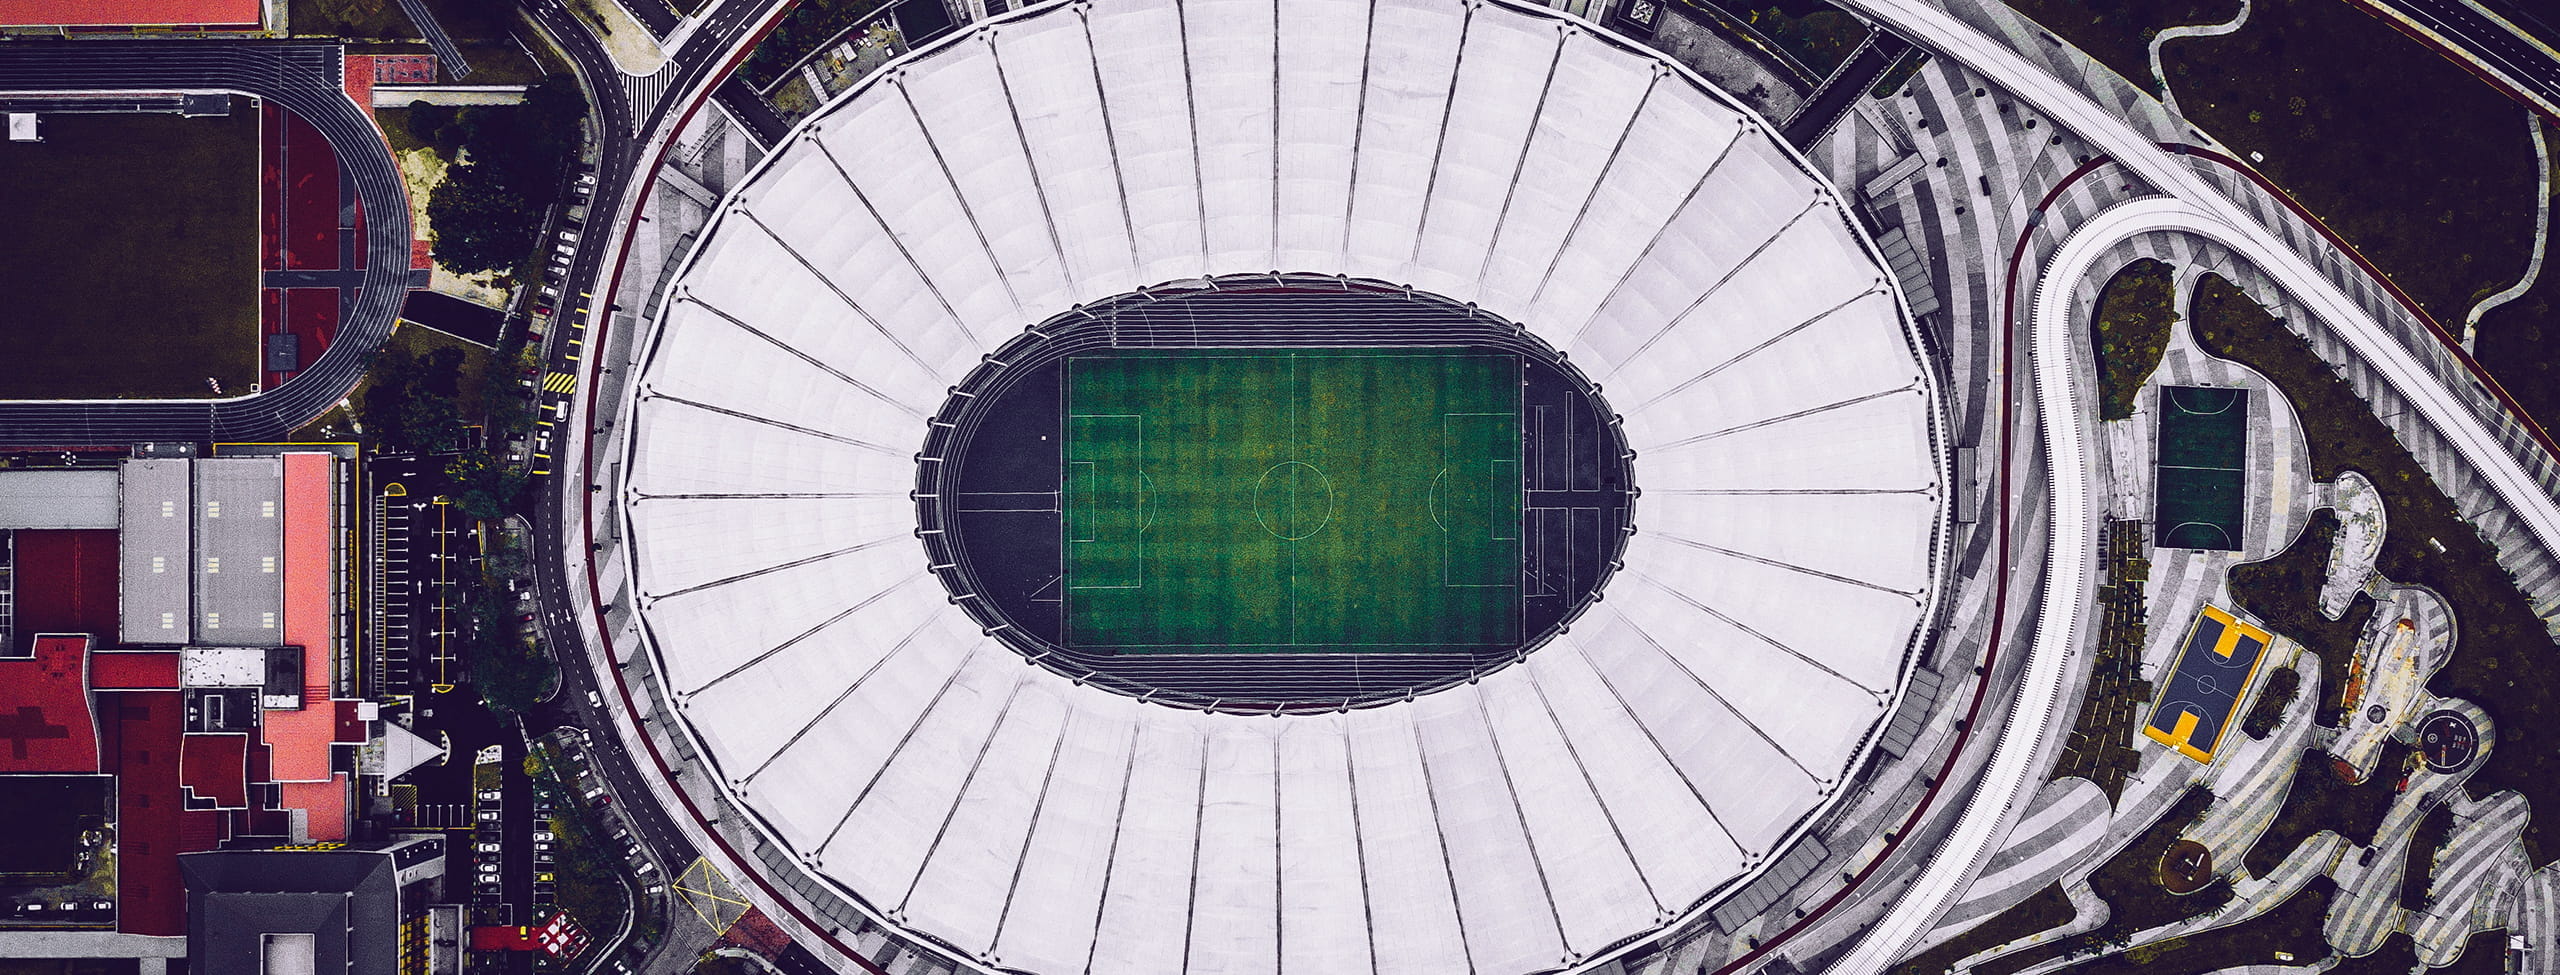 Football_Soccer_Stadium_Aerial_View_S_0478